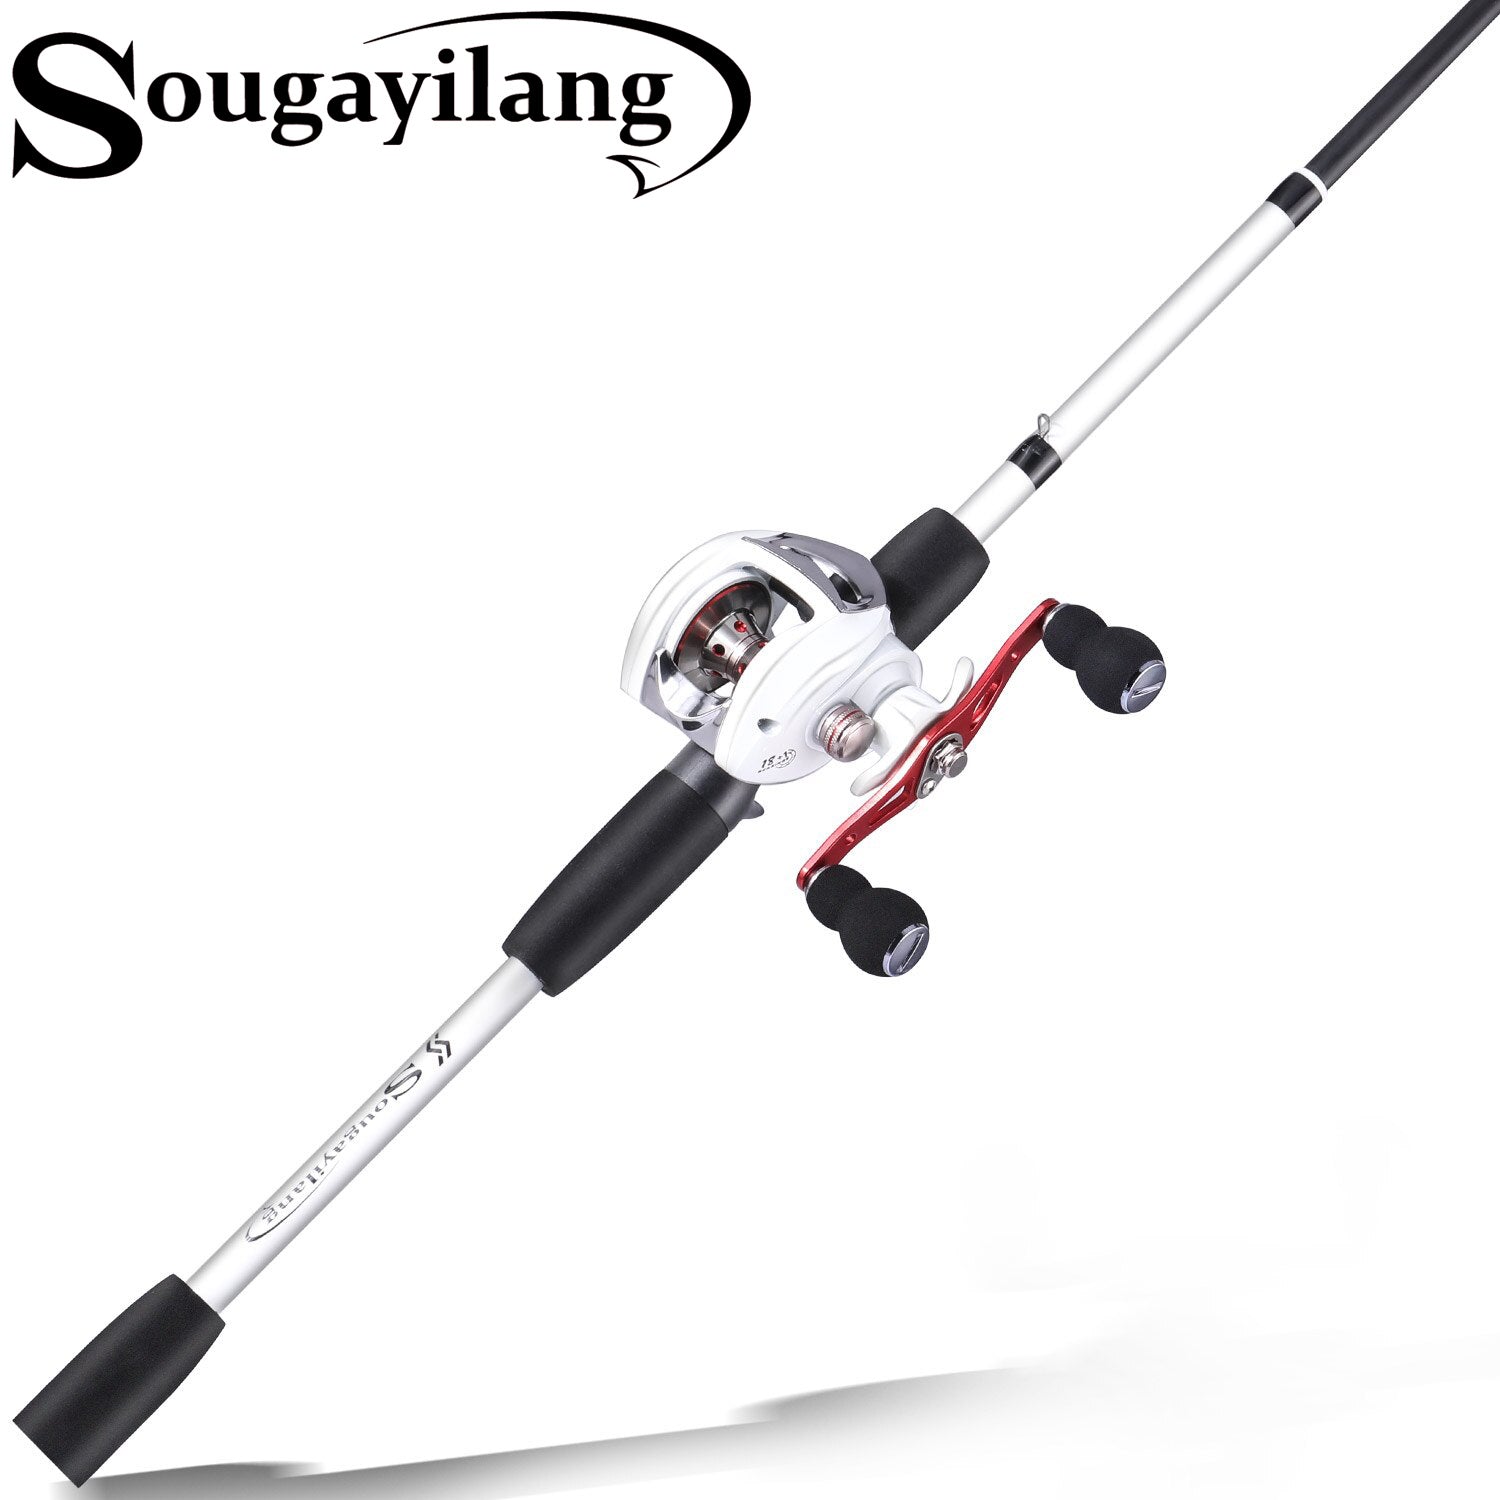 Sougayilan Baitcasting Fishing Rod And Reel Set Casting Rod 7.2:1